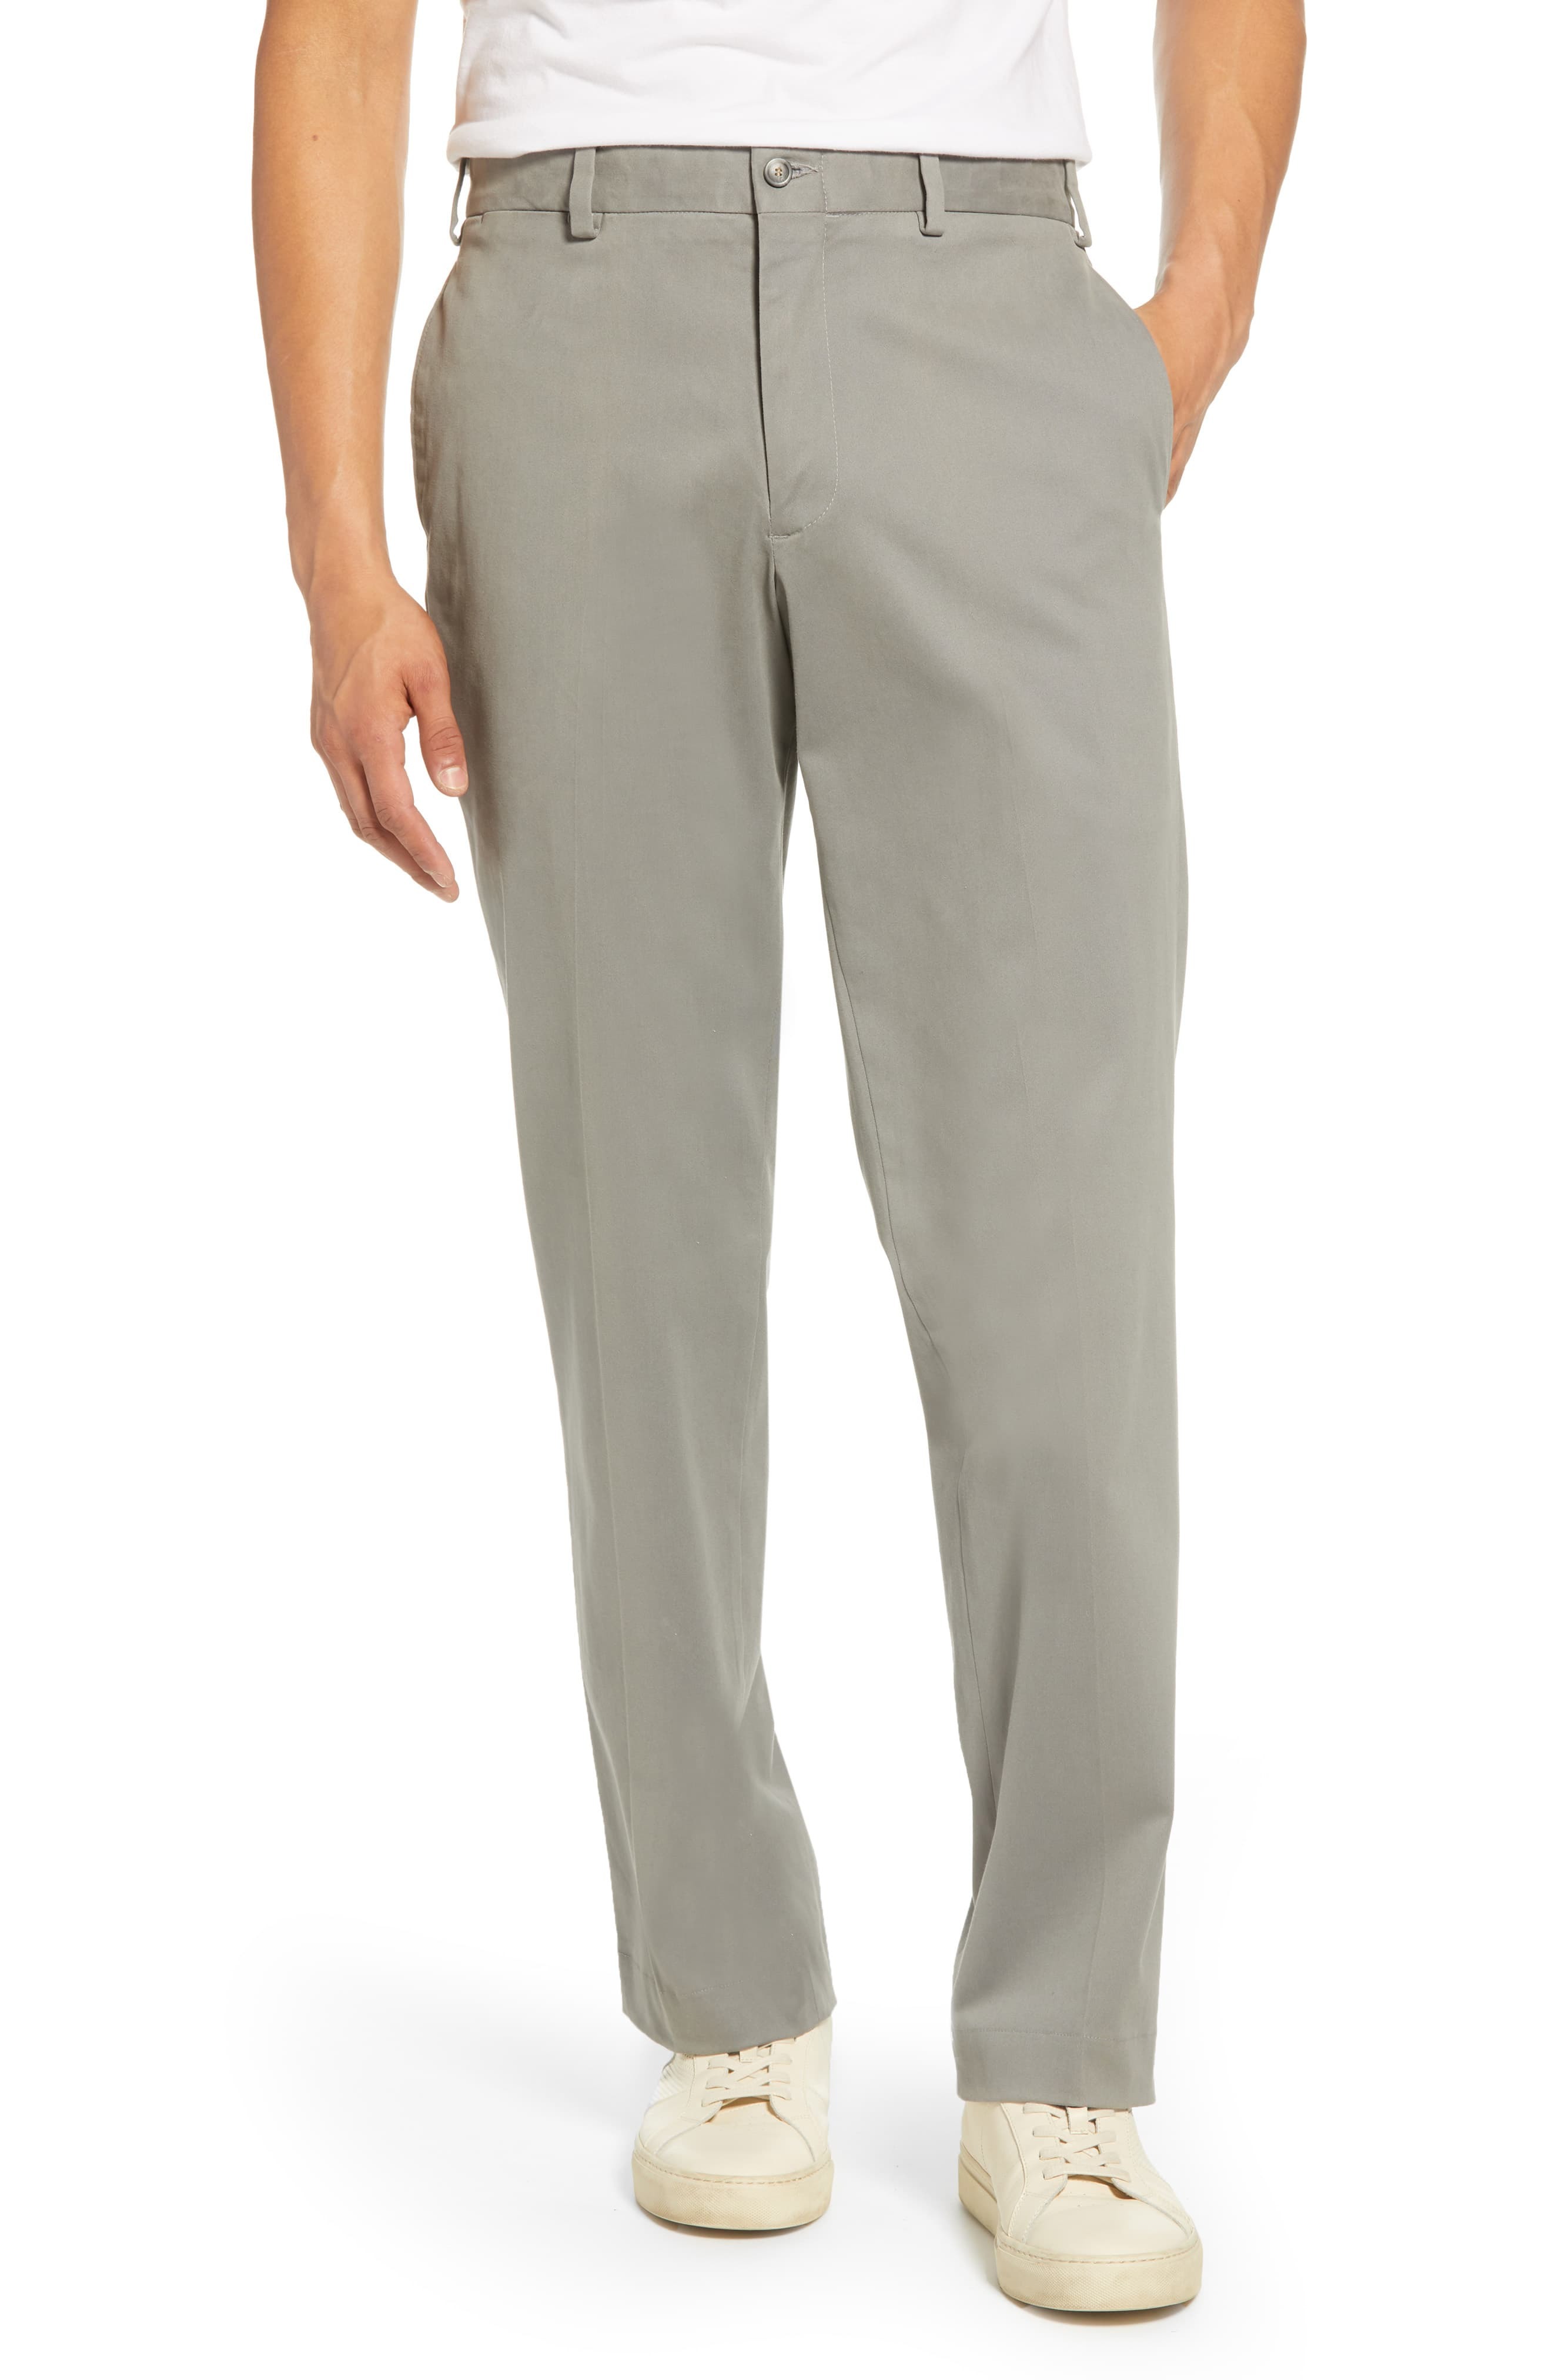 Bills Khakis M2 Classic Fit Smart Khaki Pants, $195 | Nordstrom